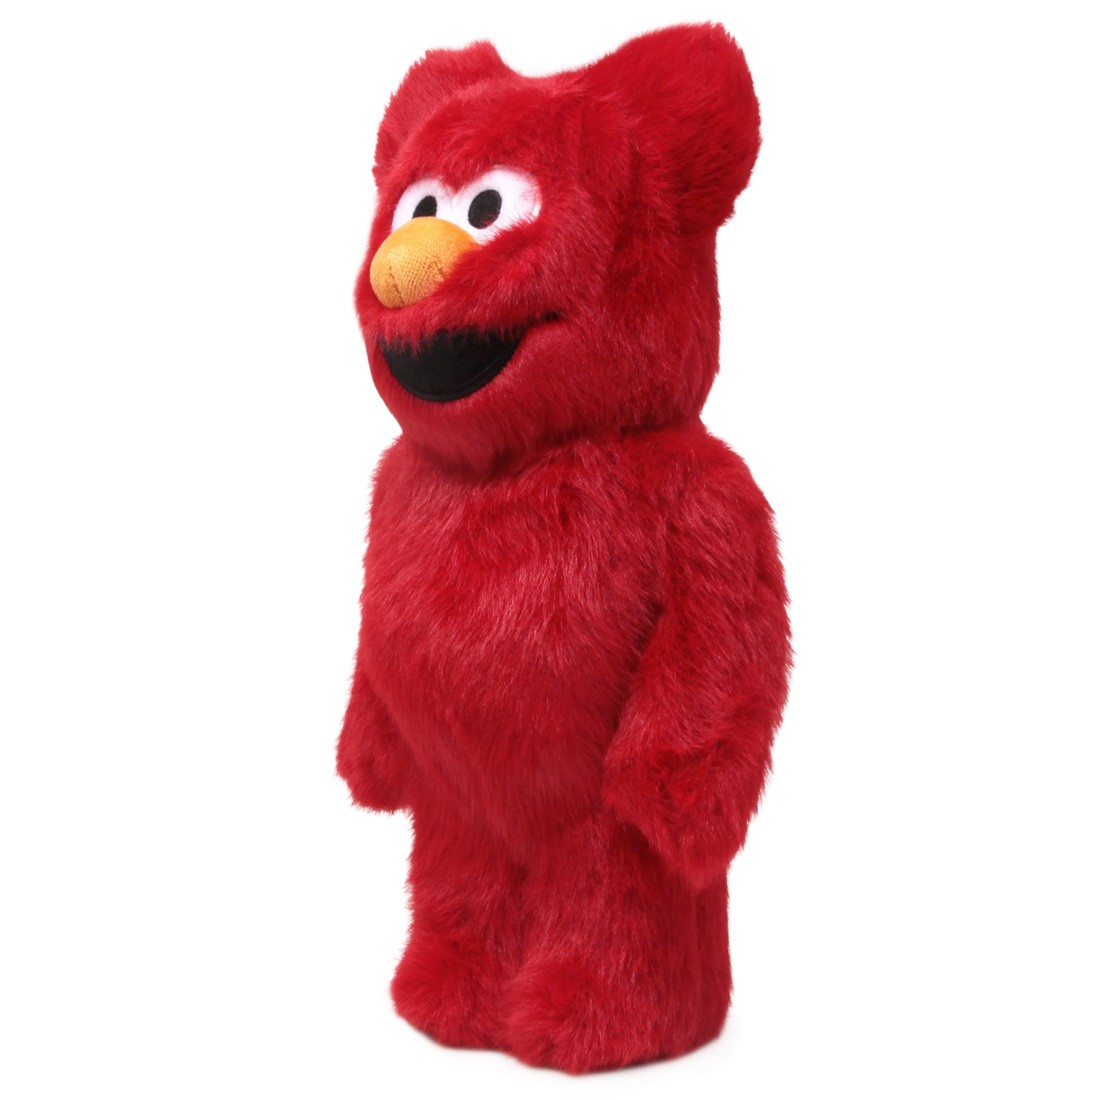 Medicom Sesame Street Elmo Costume Ver. 2.0 400% Bearbrick Figure red